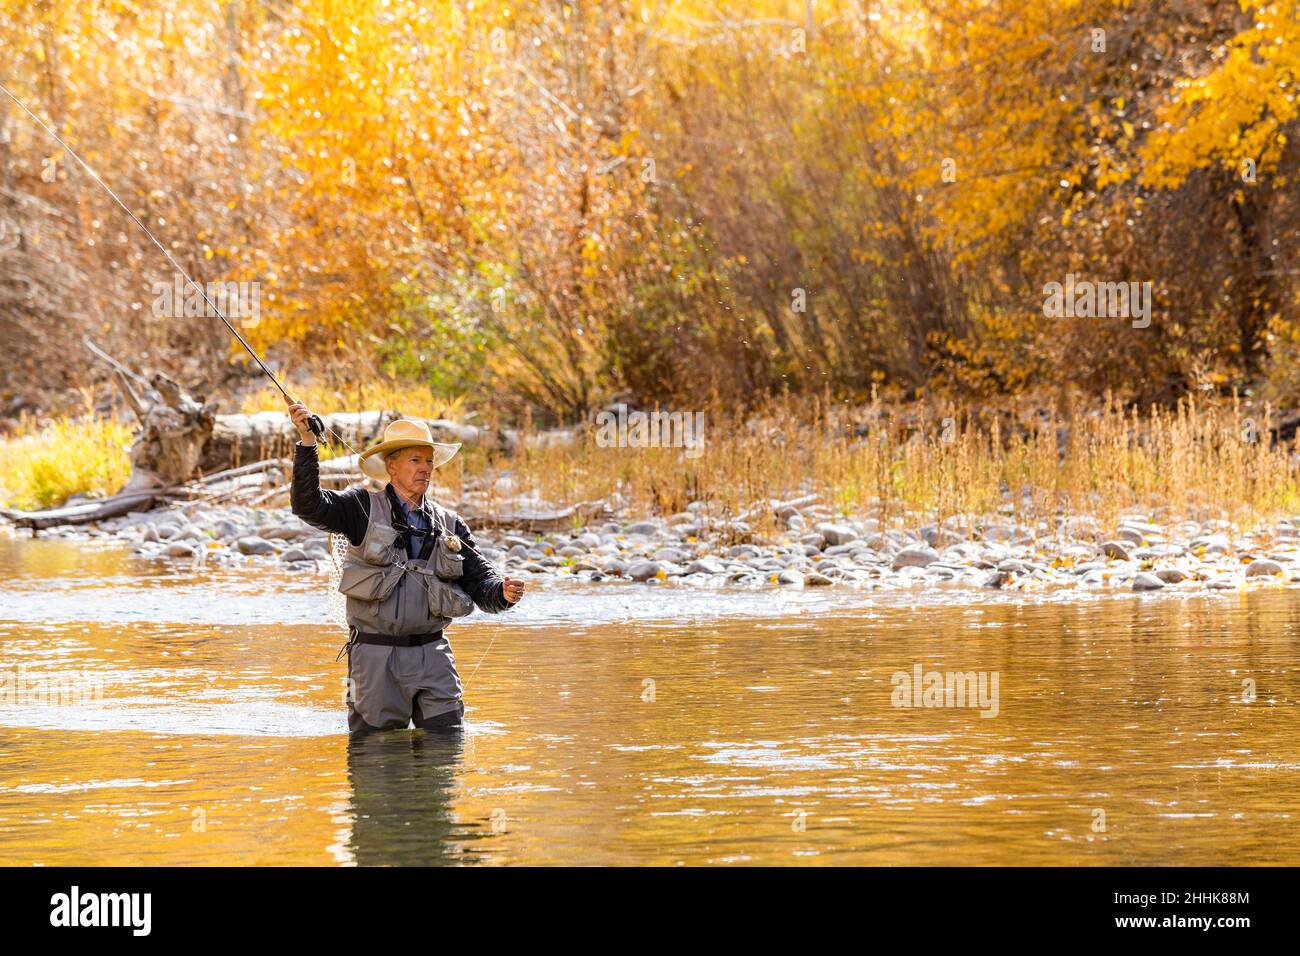 USA, Idaho, Bellevue, Senior man fly fishing in Big Wood River in Autumn Stock Photo